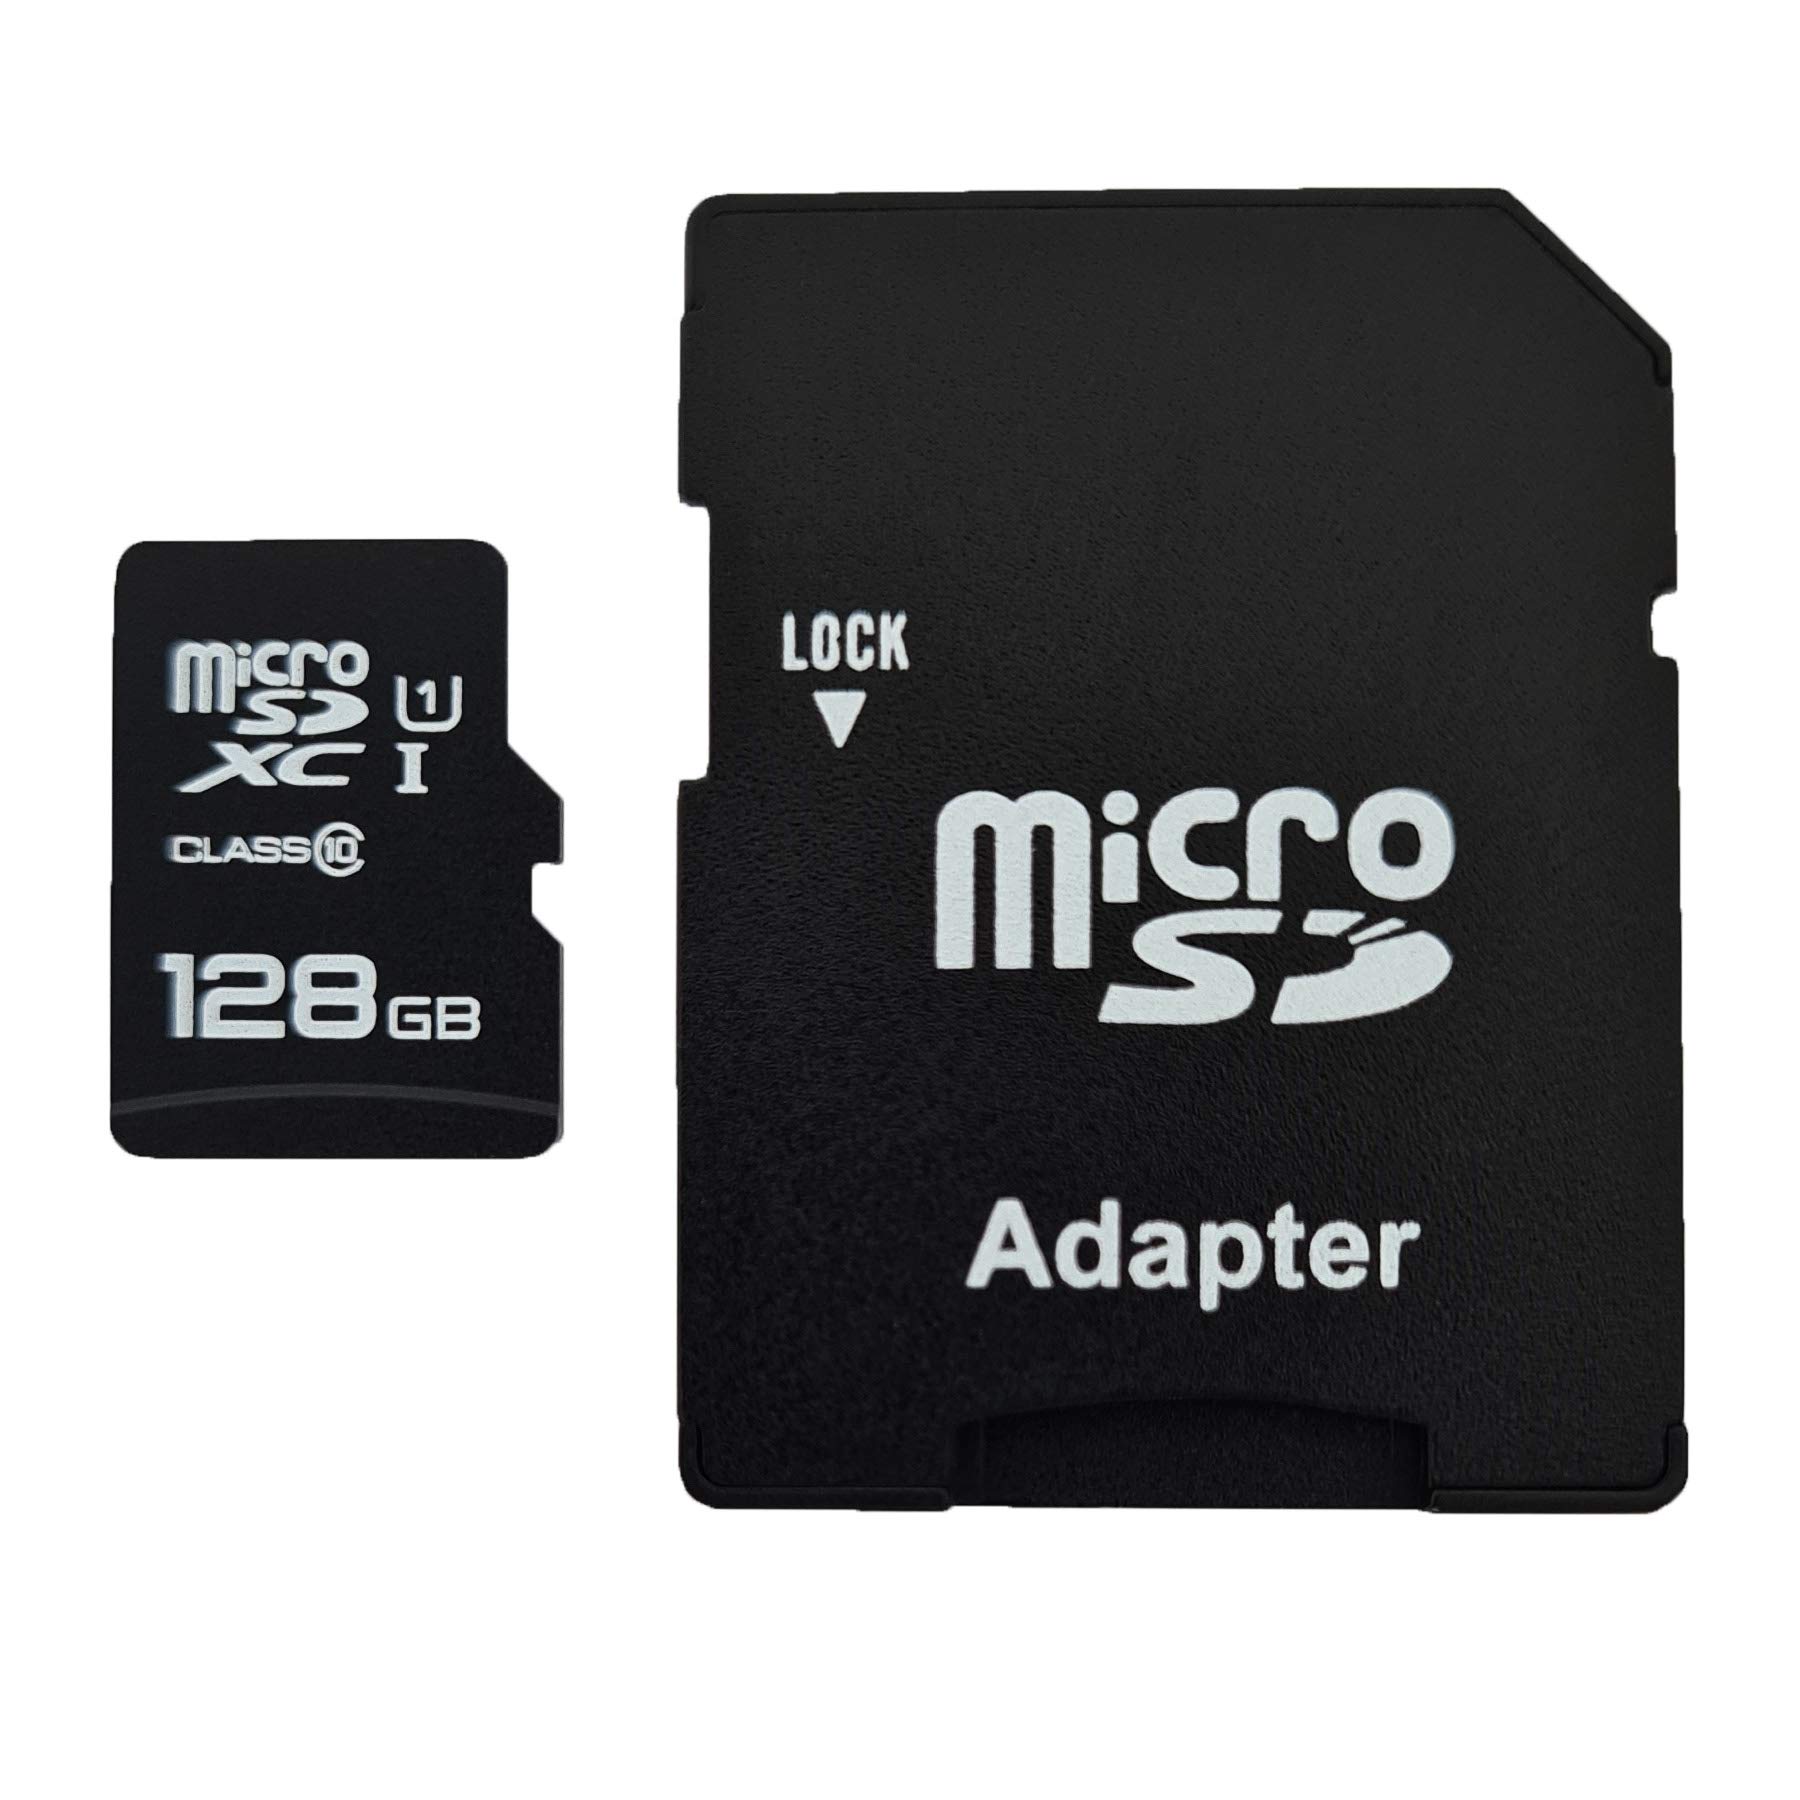 dekoelektropunktde 128GB MicroSDXC Speicherkarte mit Adapter Class 10 kompatibel für Pentax Optio E85 V10 W90